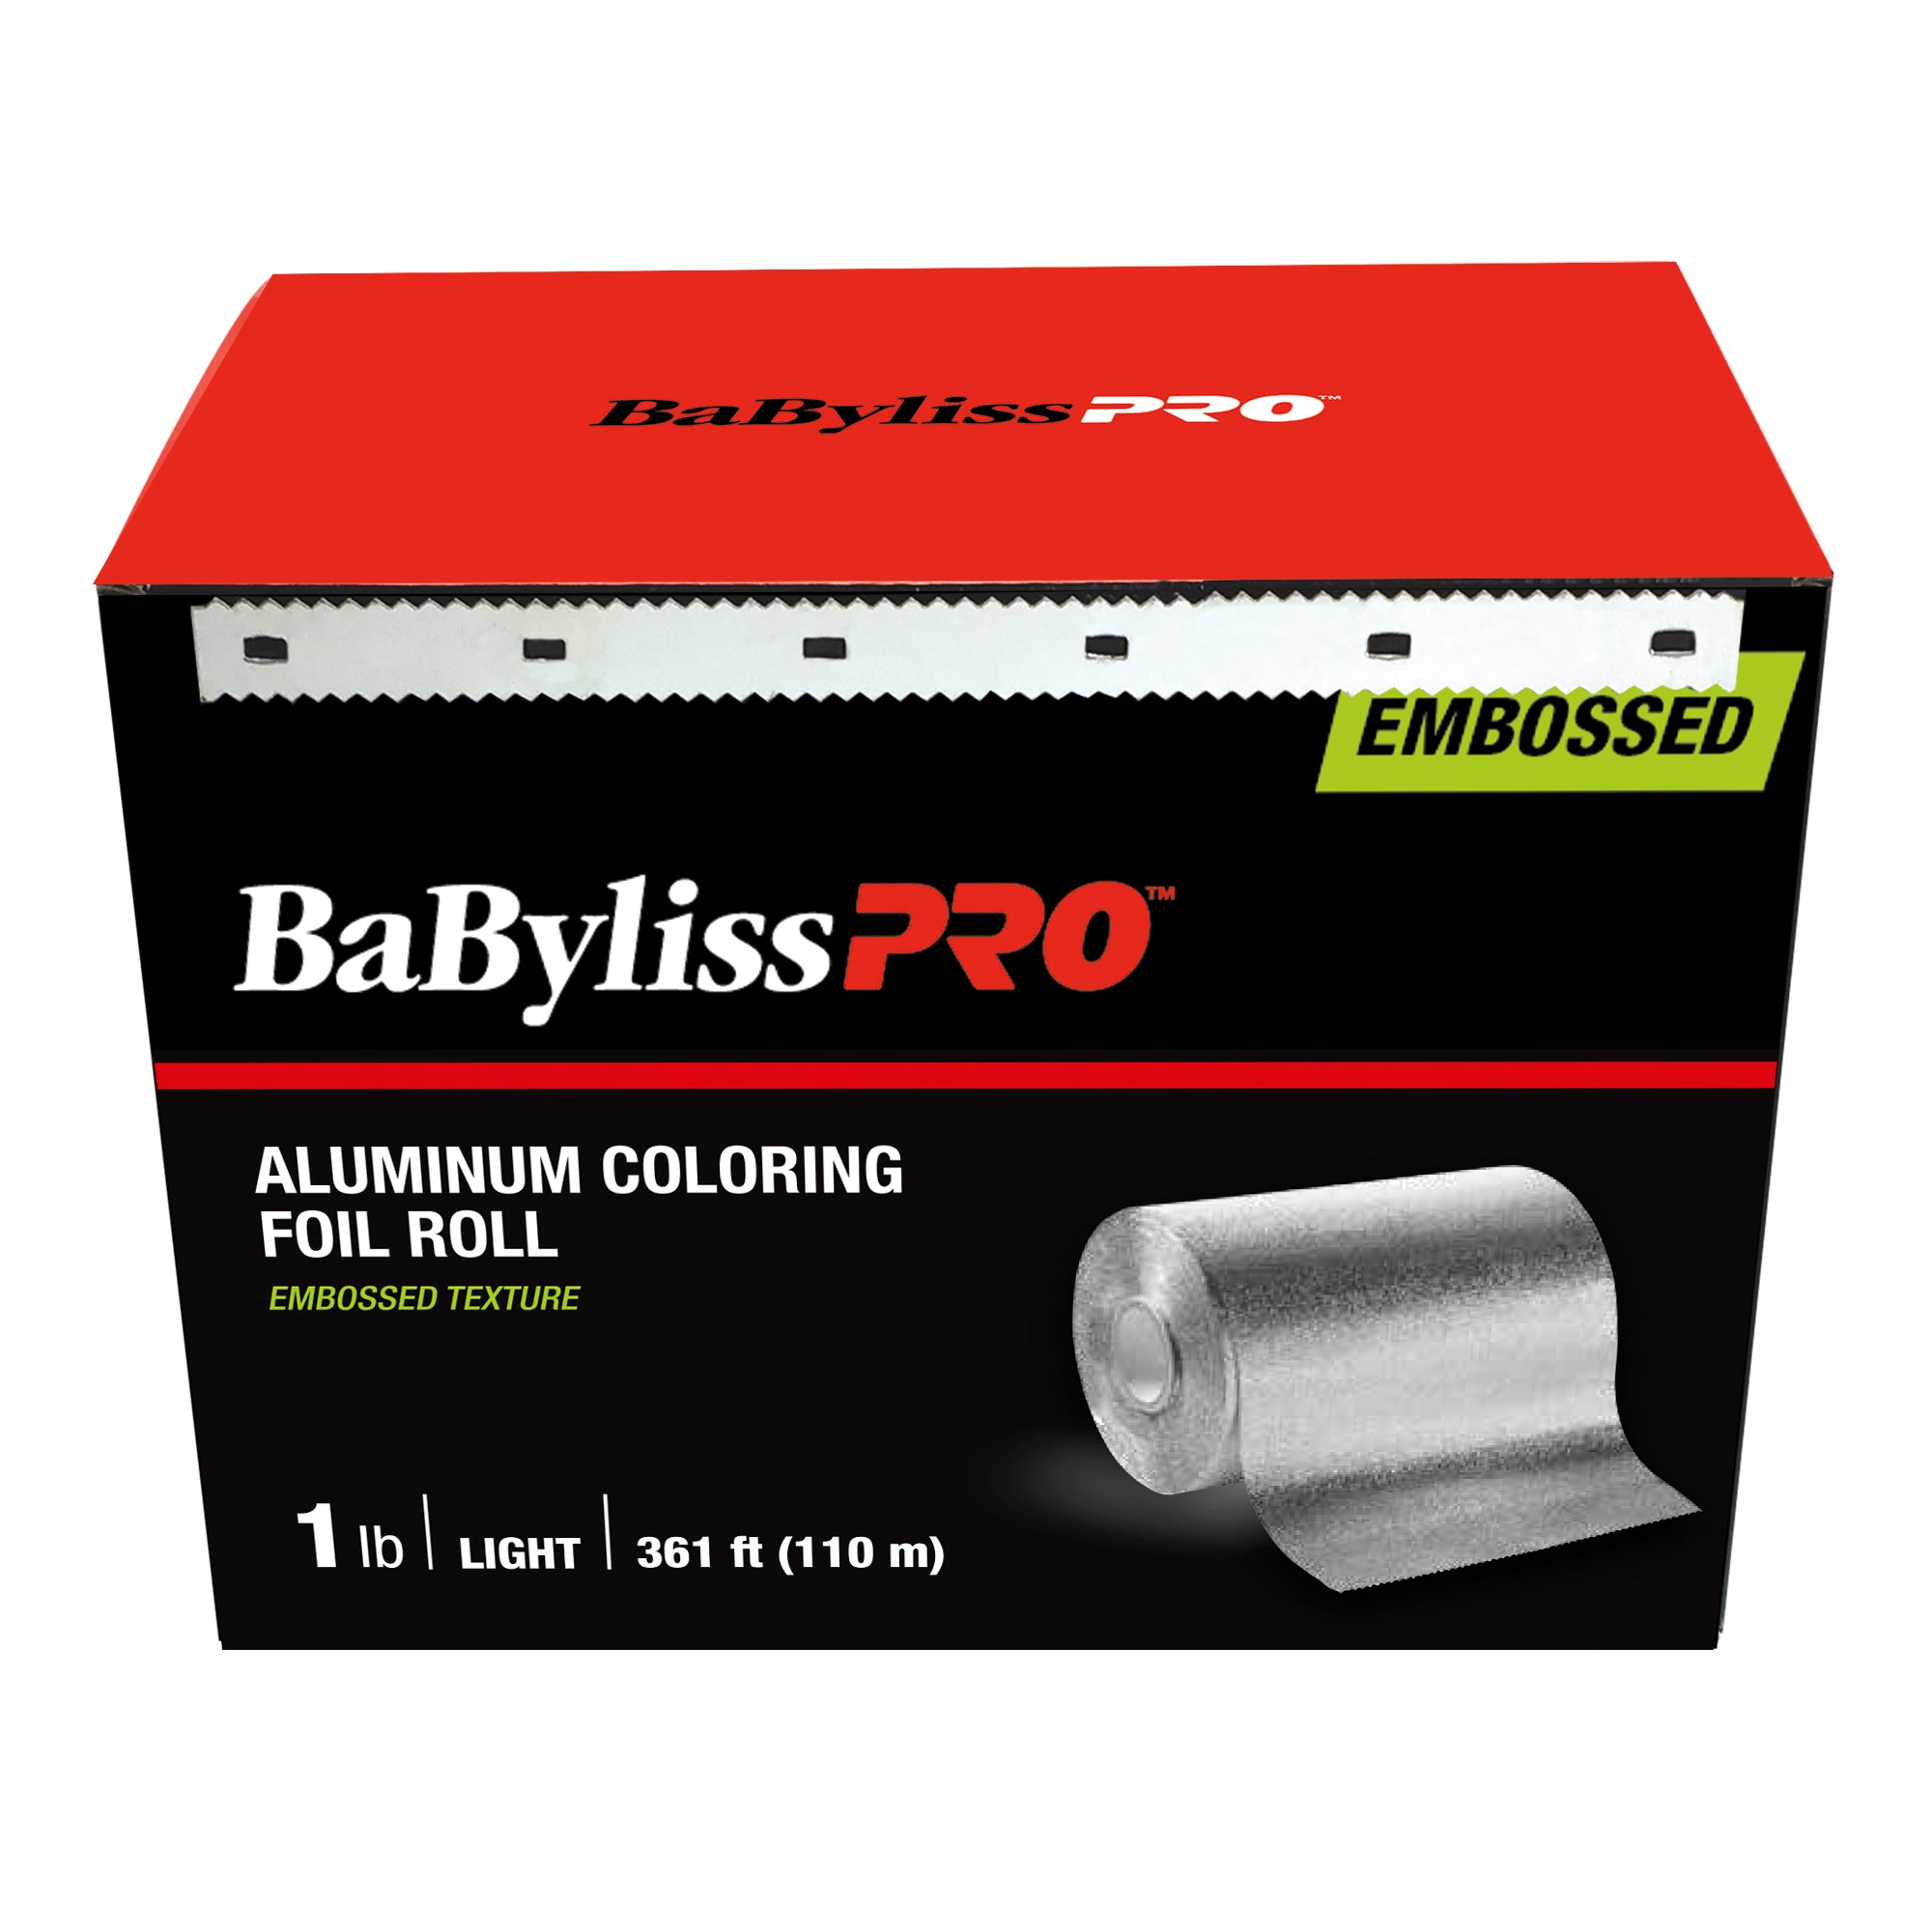 BabylissPro Rough Foil Roll, 1lb Light (361 FT)